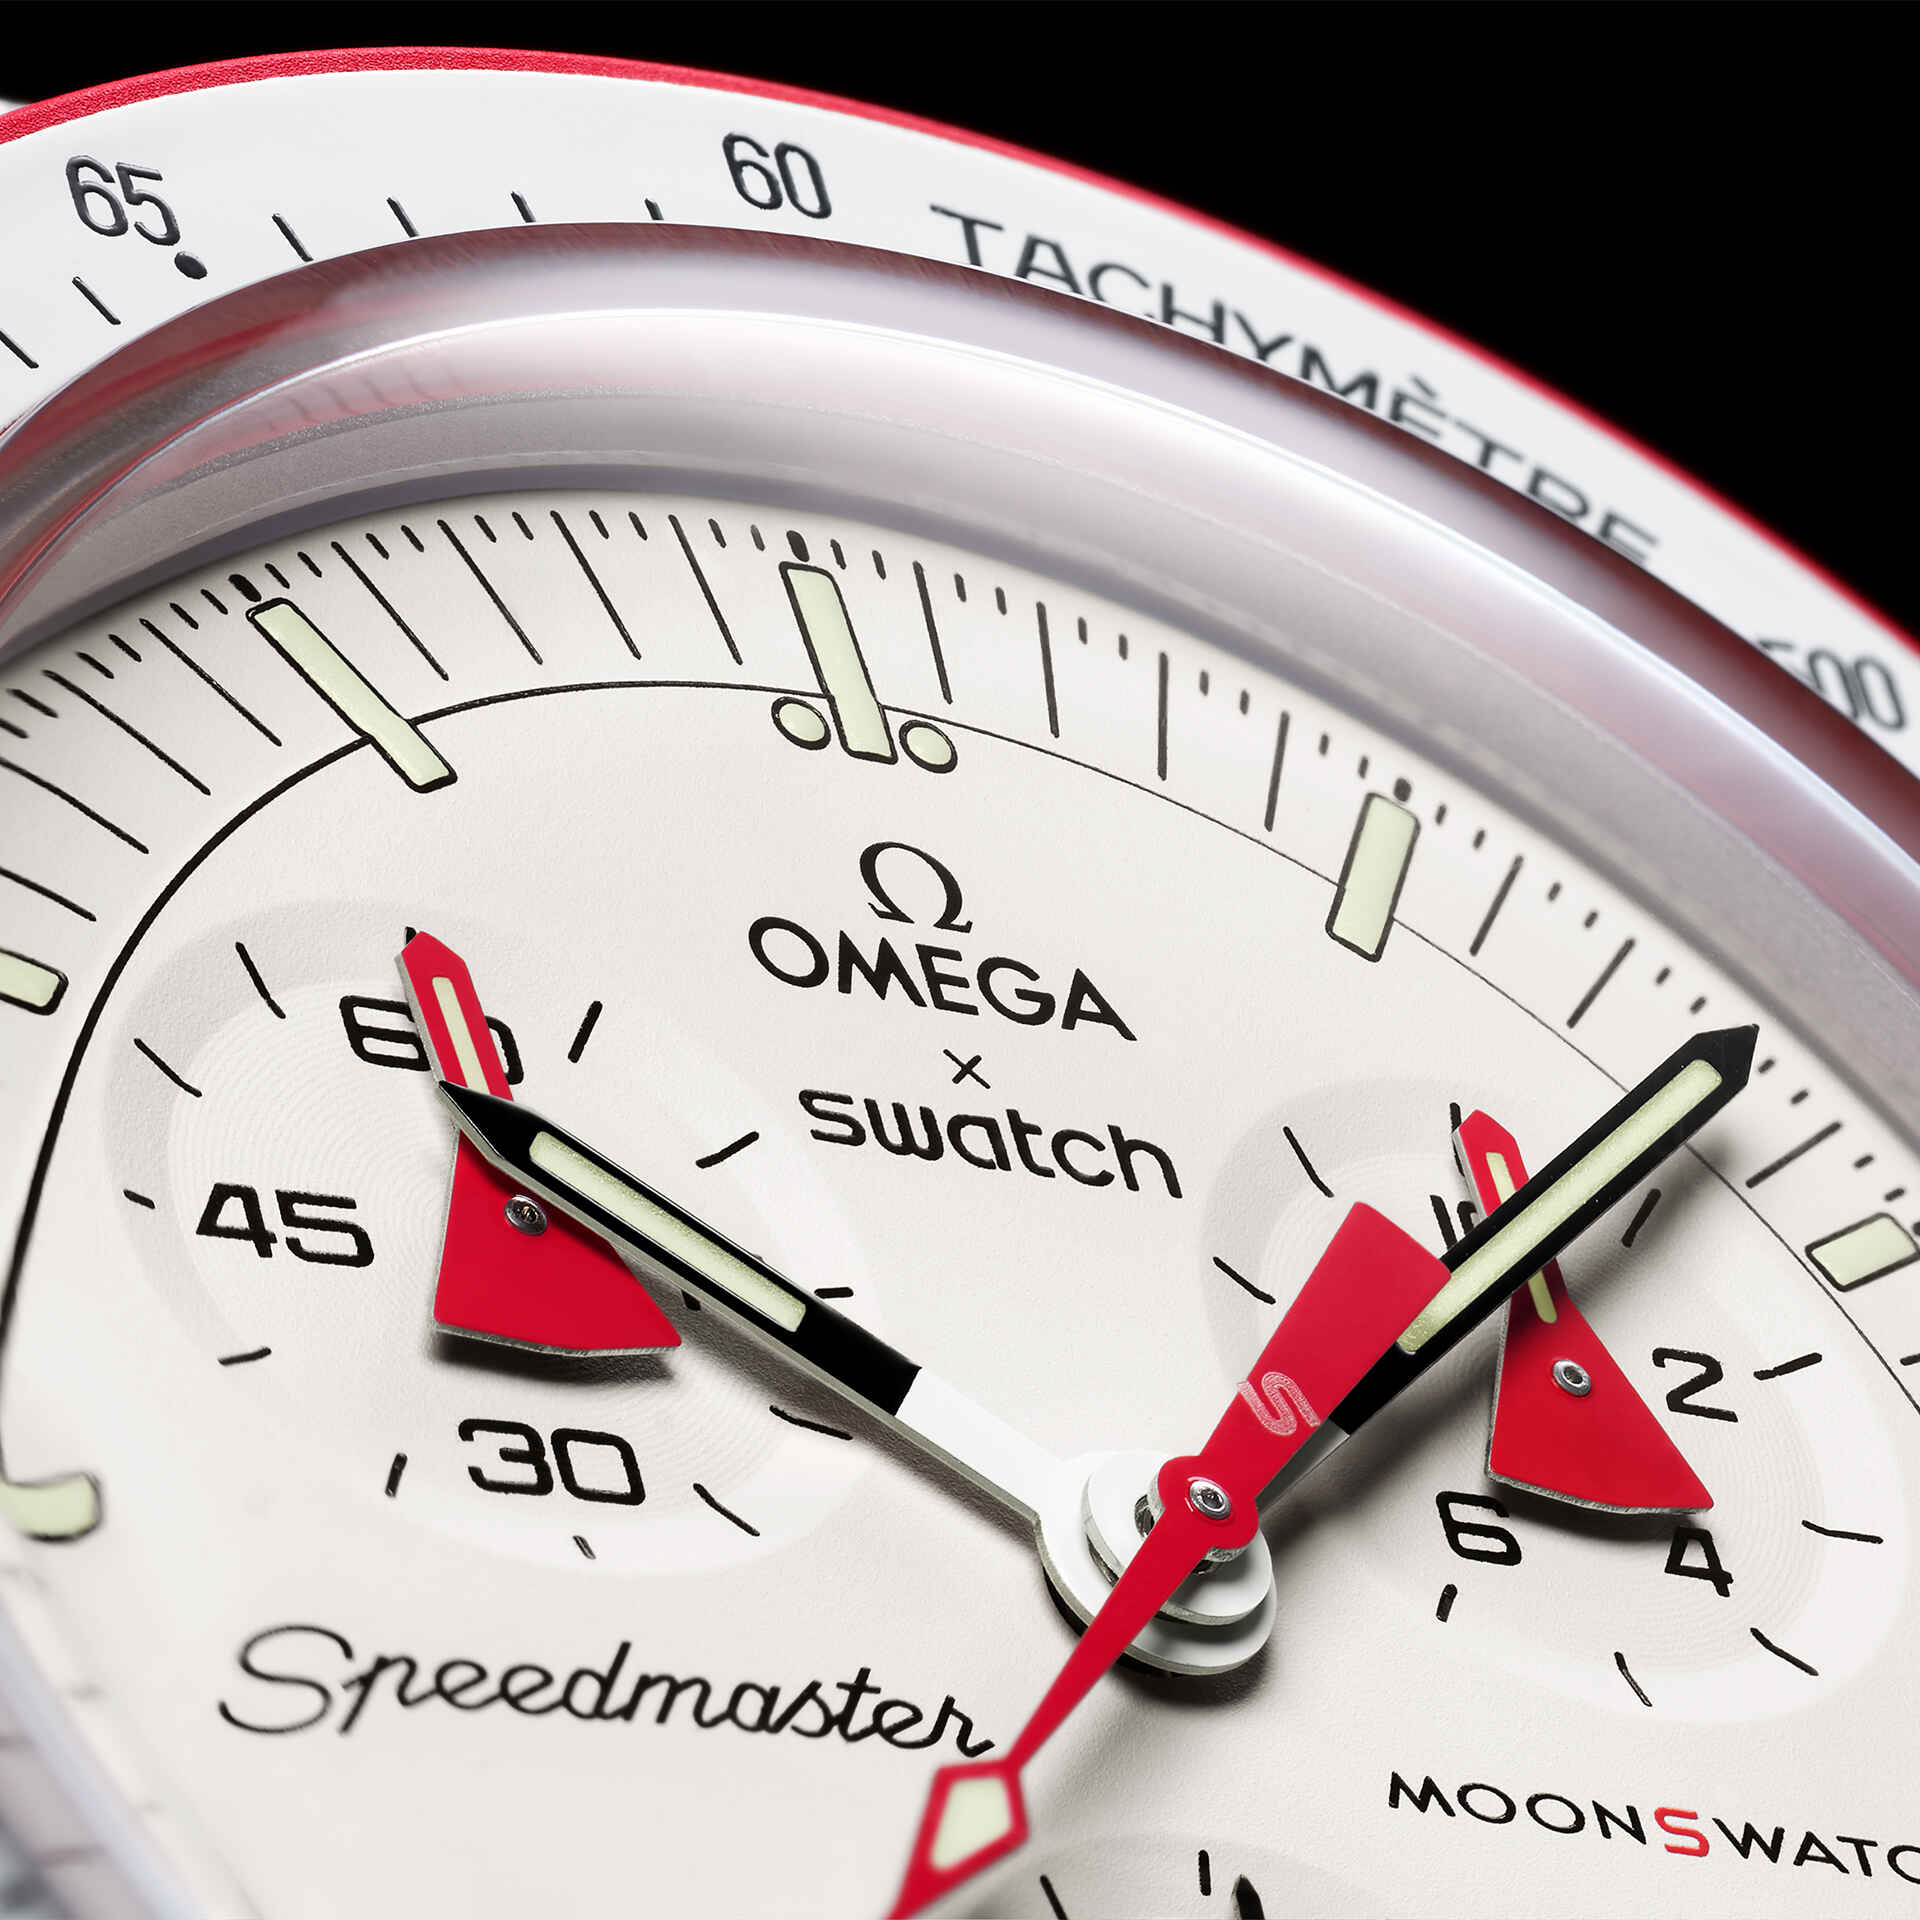 Omega x Swatch Speedmaster 